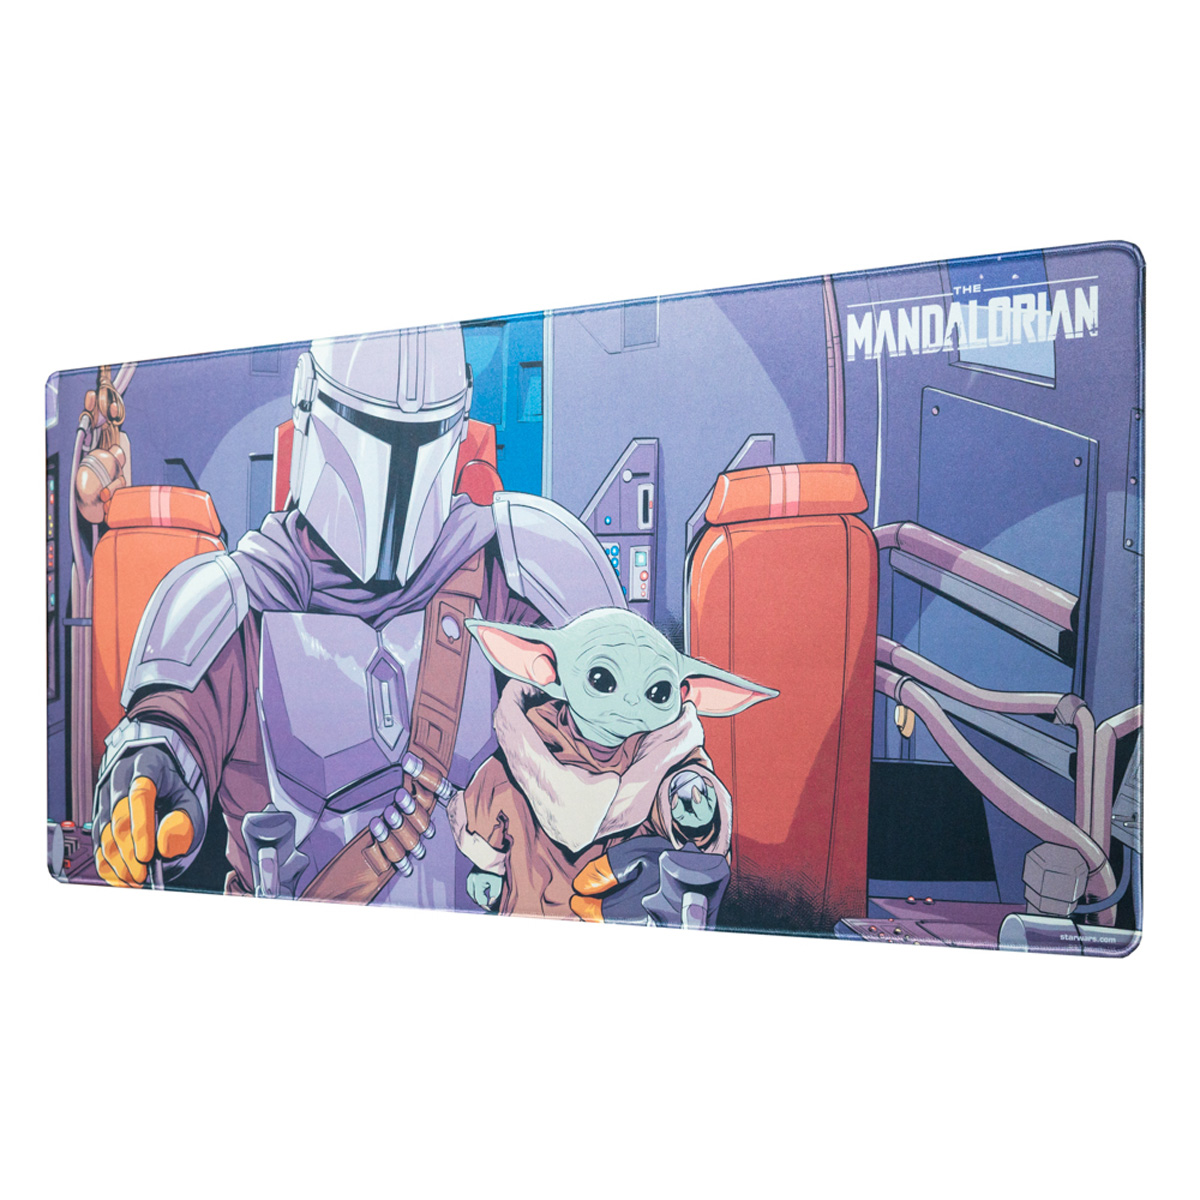 Mandalorian Gaming Mousepad The Star - Wars